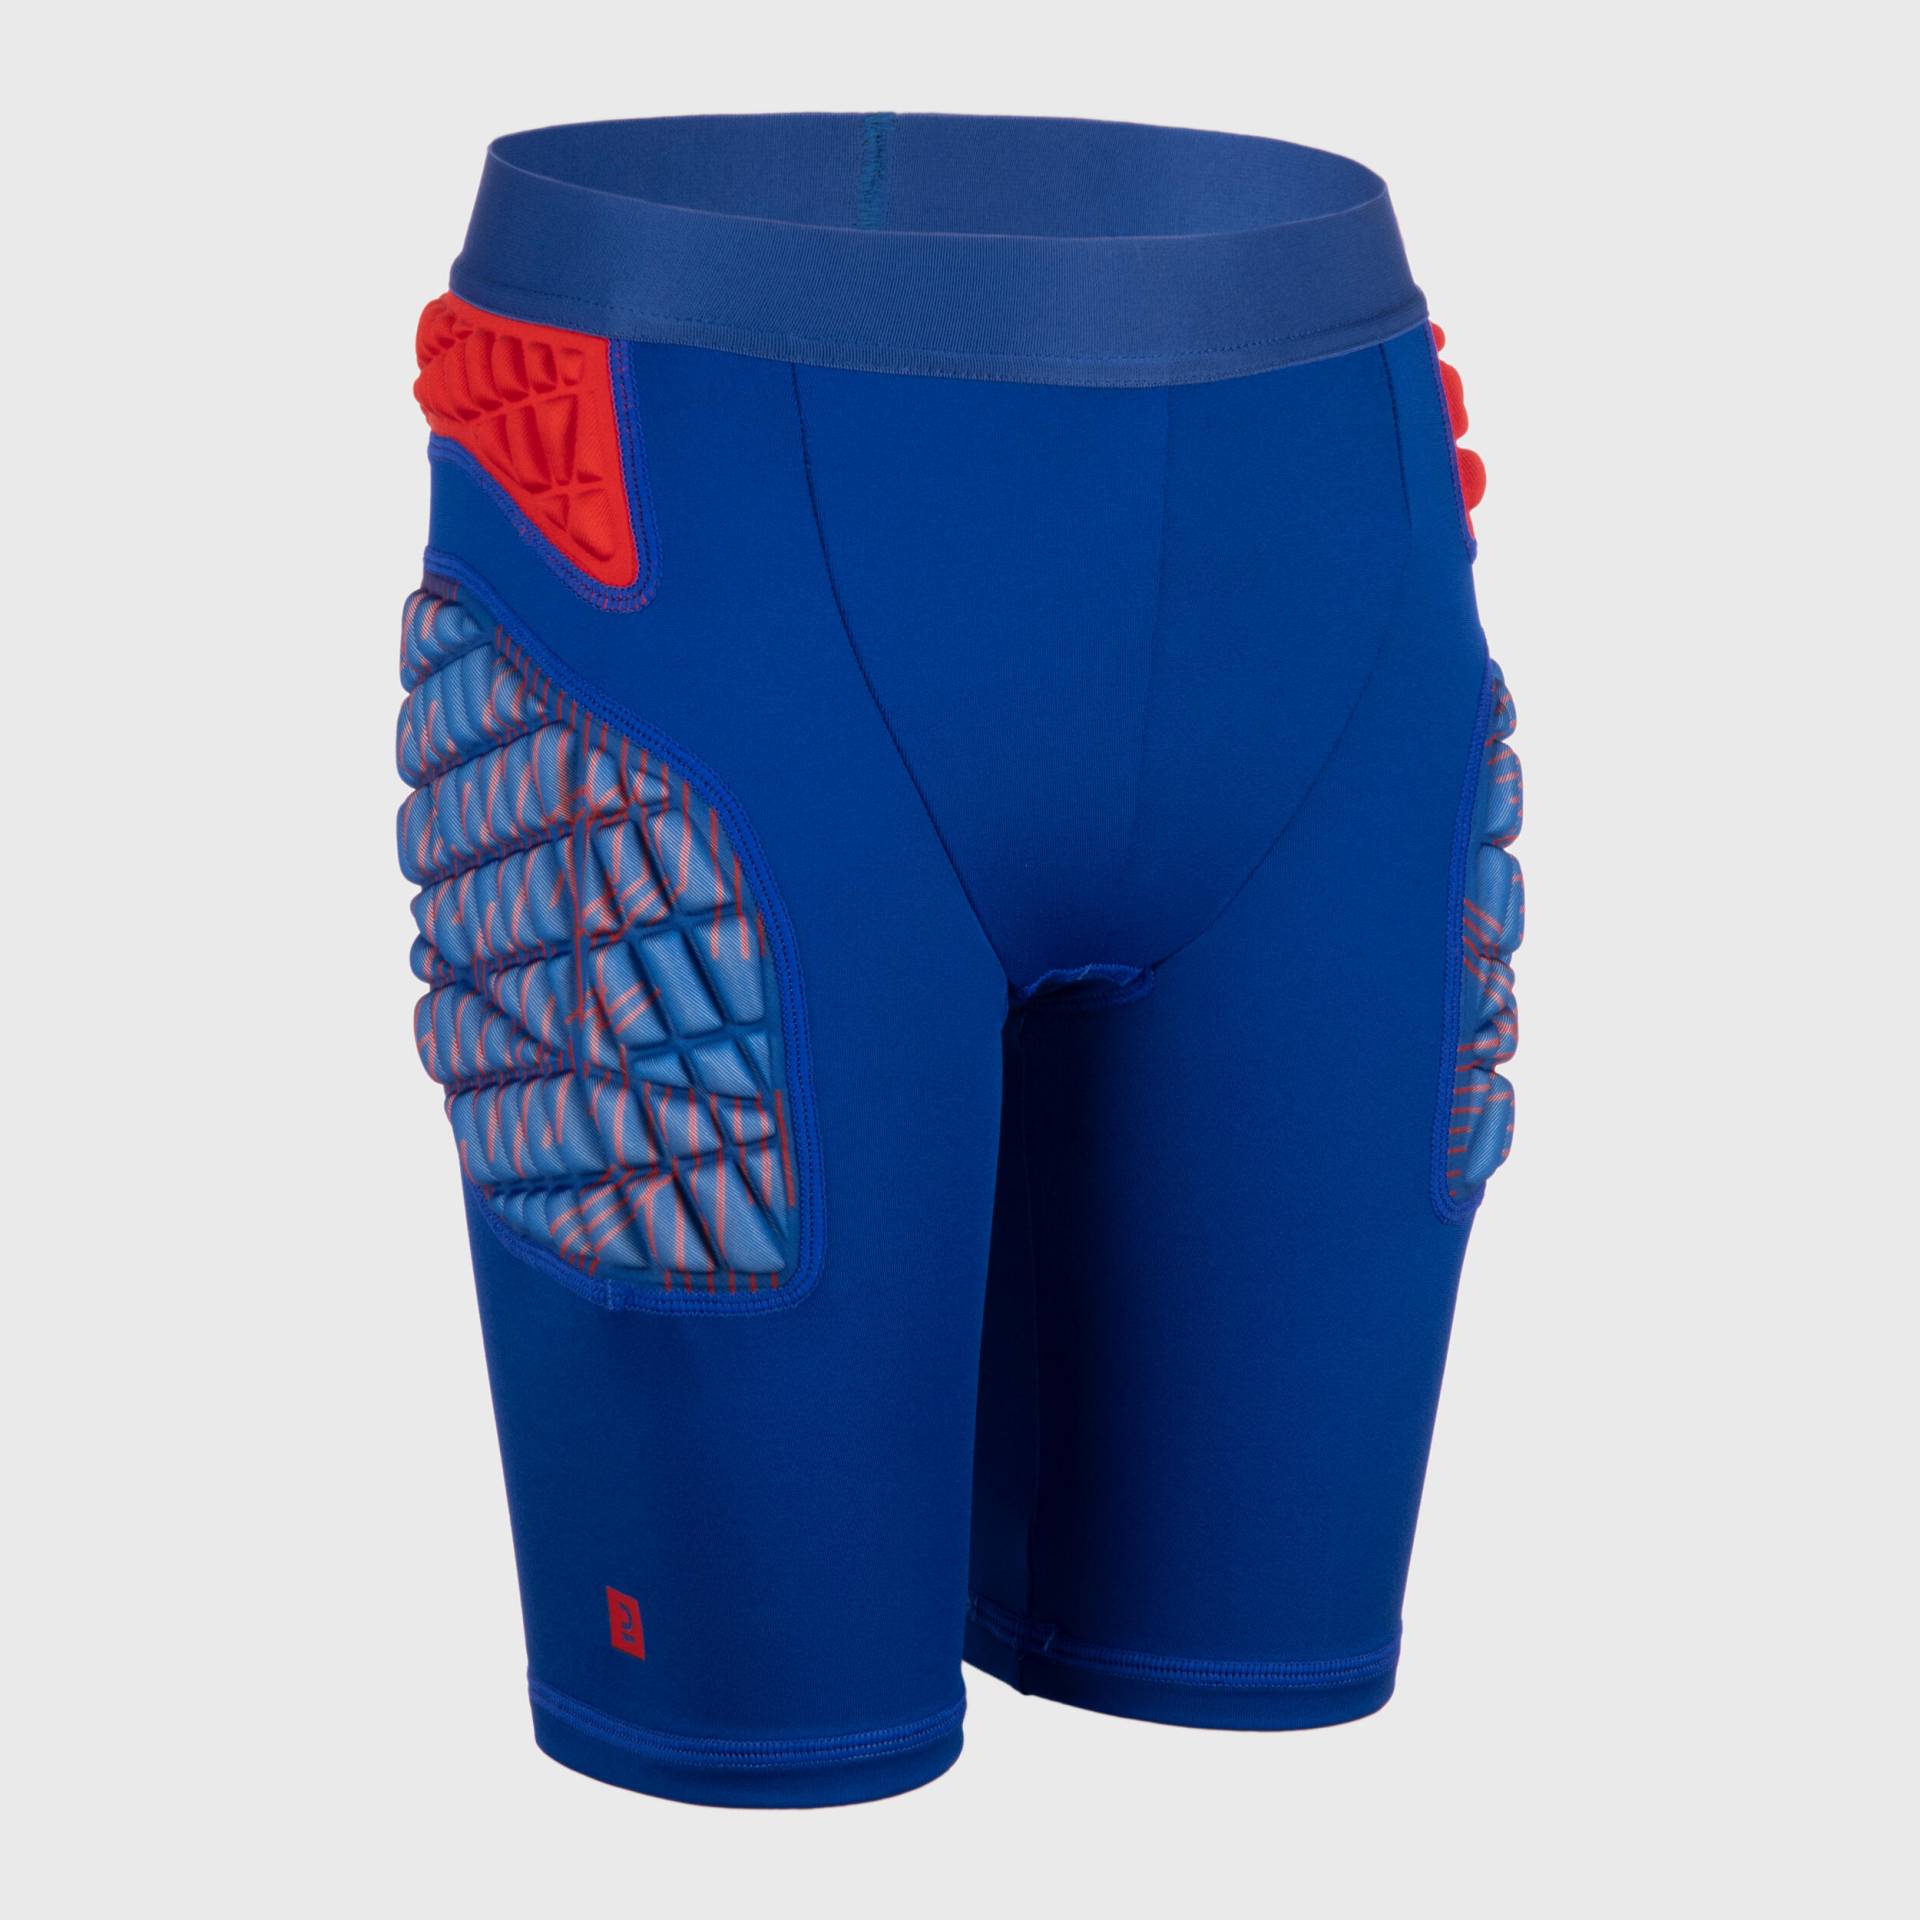 Kinder Rugby Protector Shorts R500 blau/rot von OFFLOAD